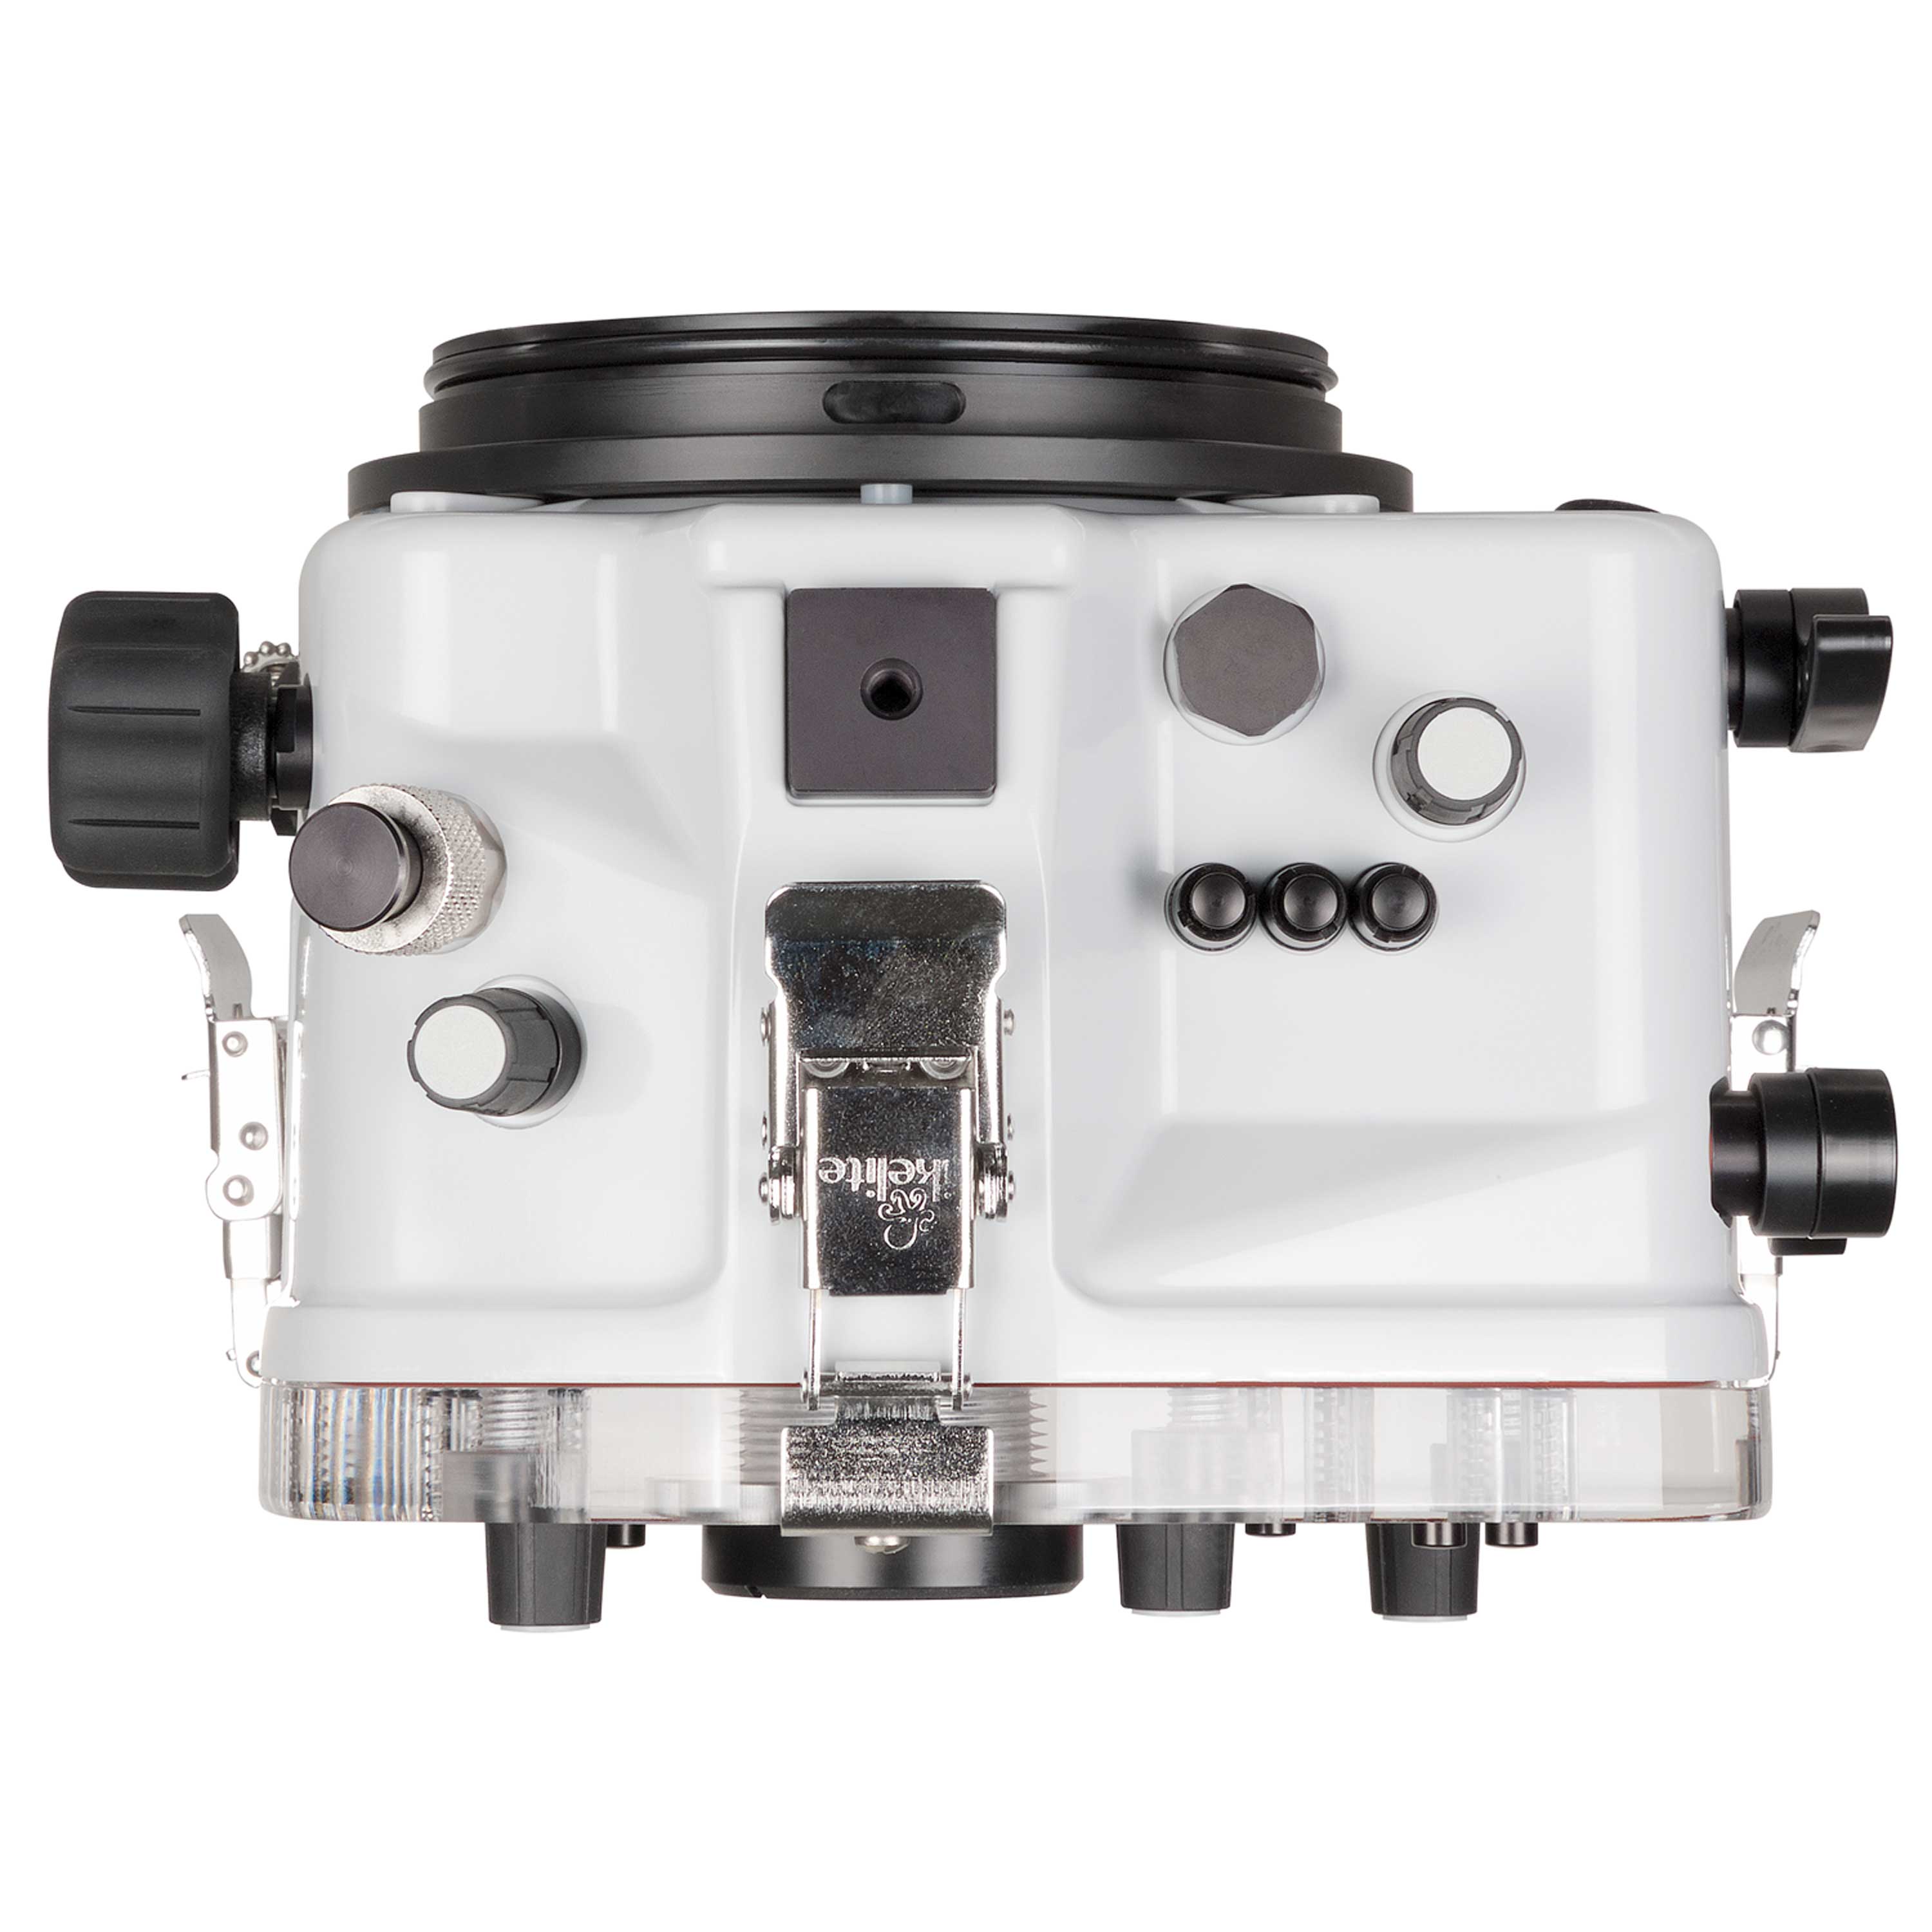 200DL Underwater Housing for Canon EOS 7D Mark II DSLR Cameras